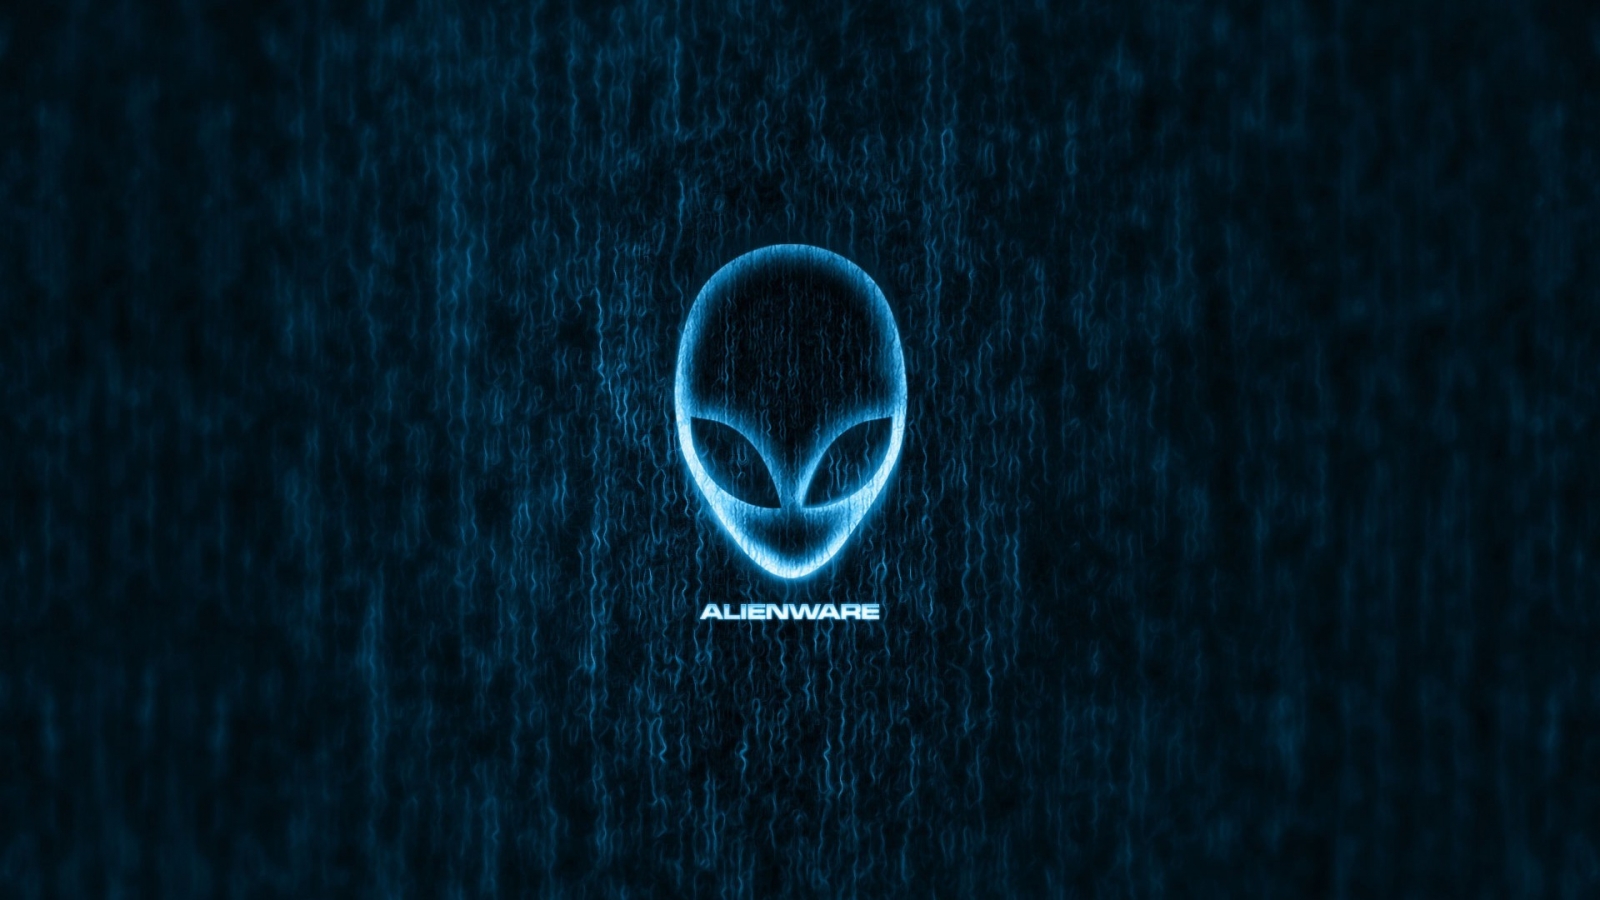 Alienware Company Logo for 1600 x 900 HDTV resolution